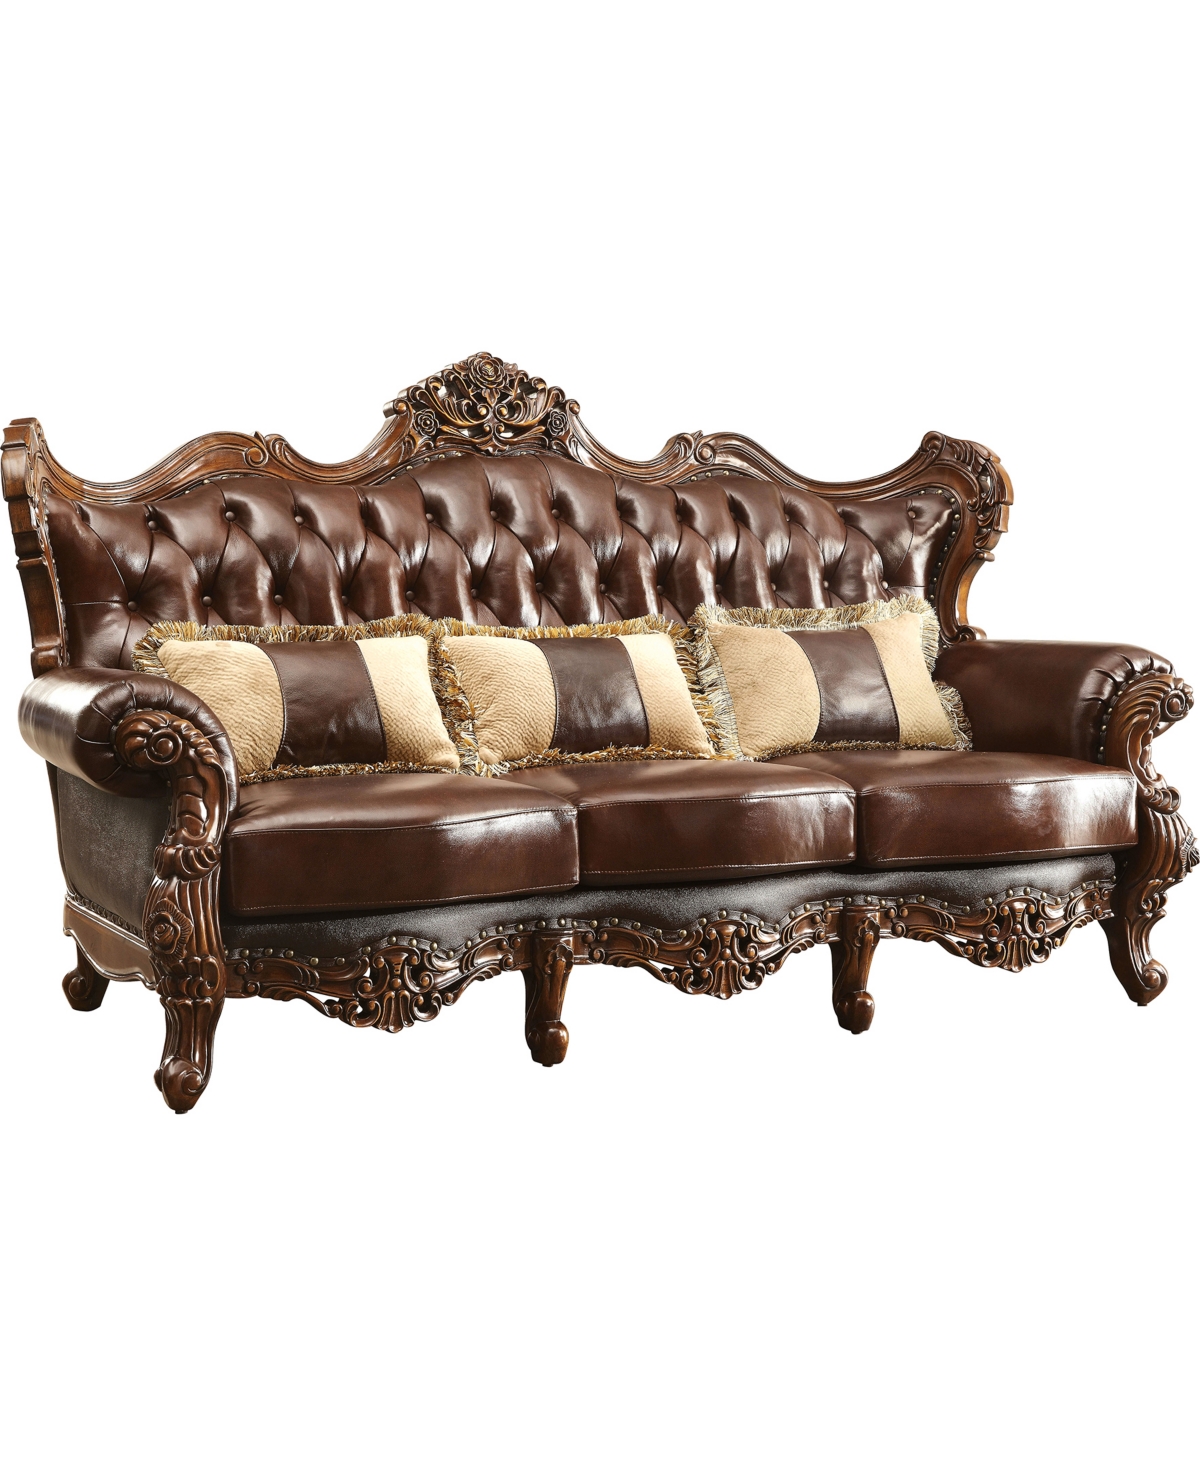 Morenzo Upholstered Sofa